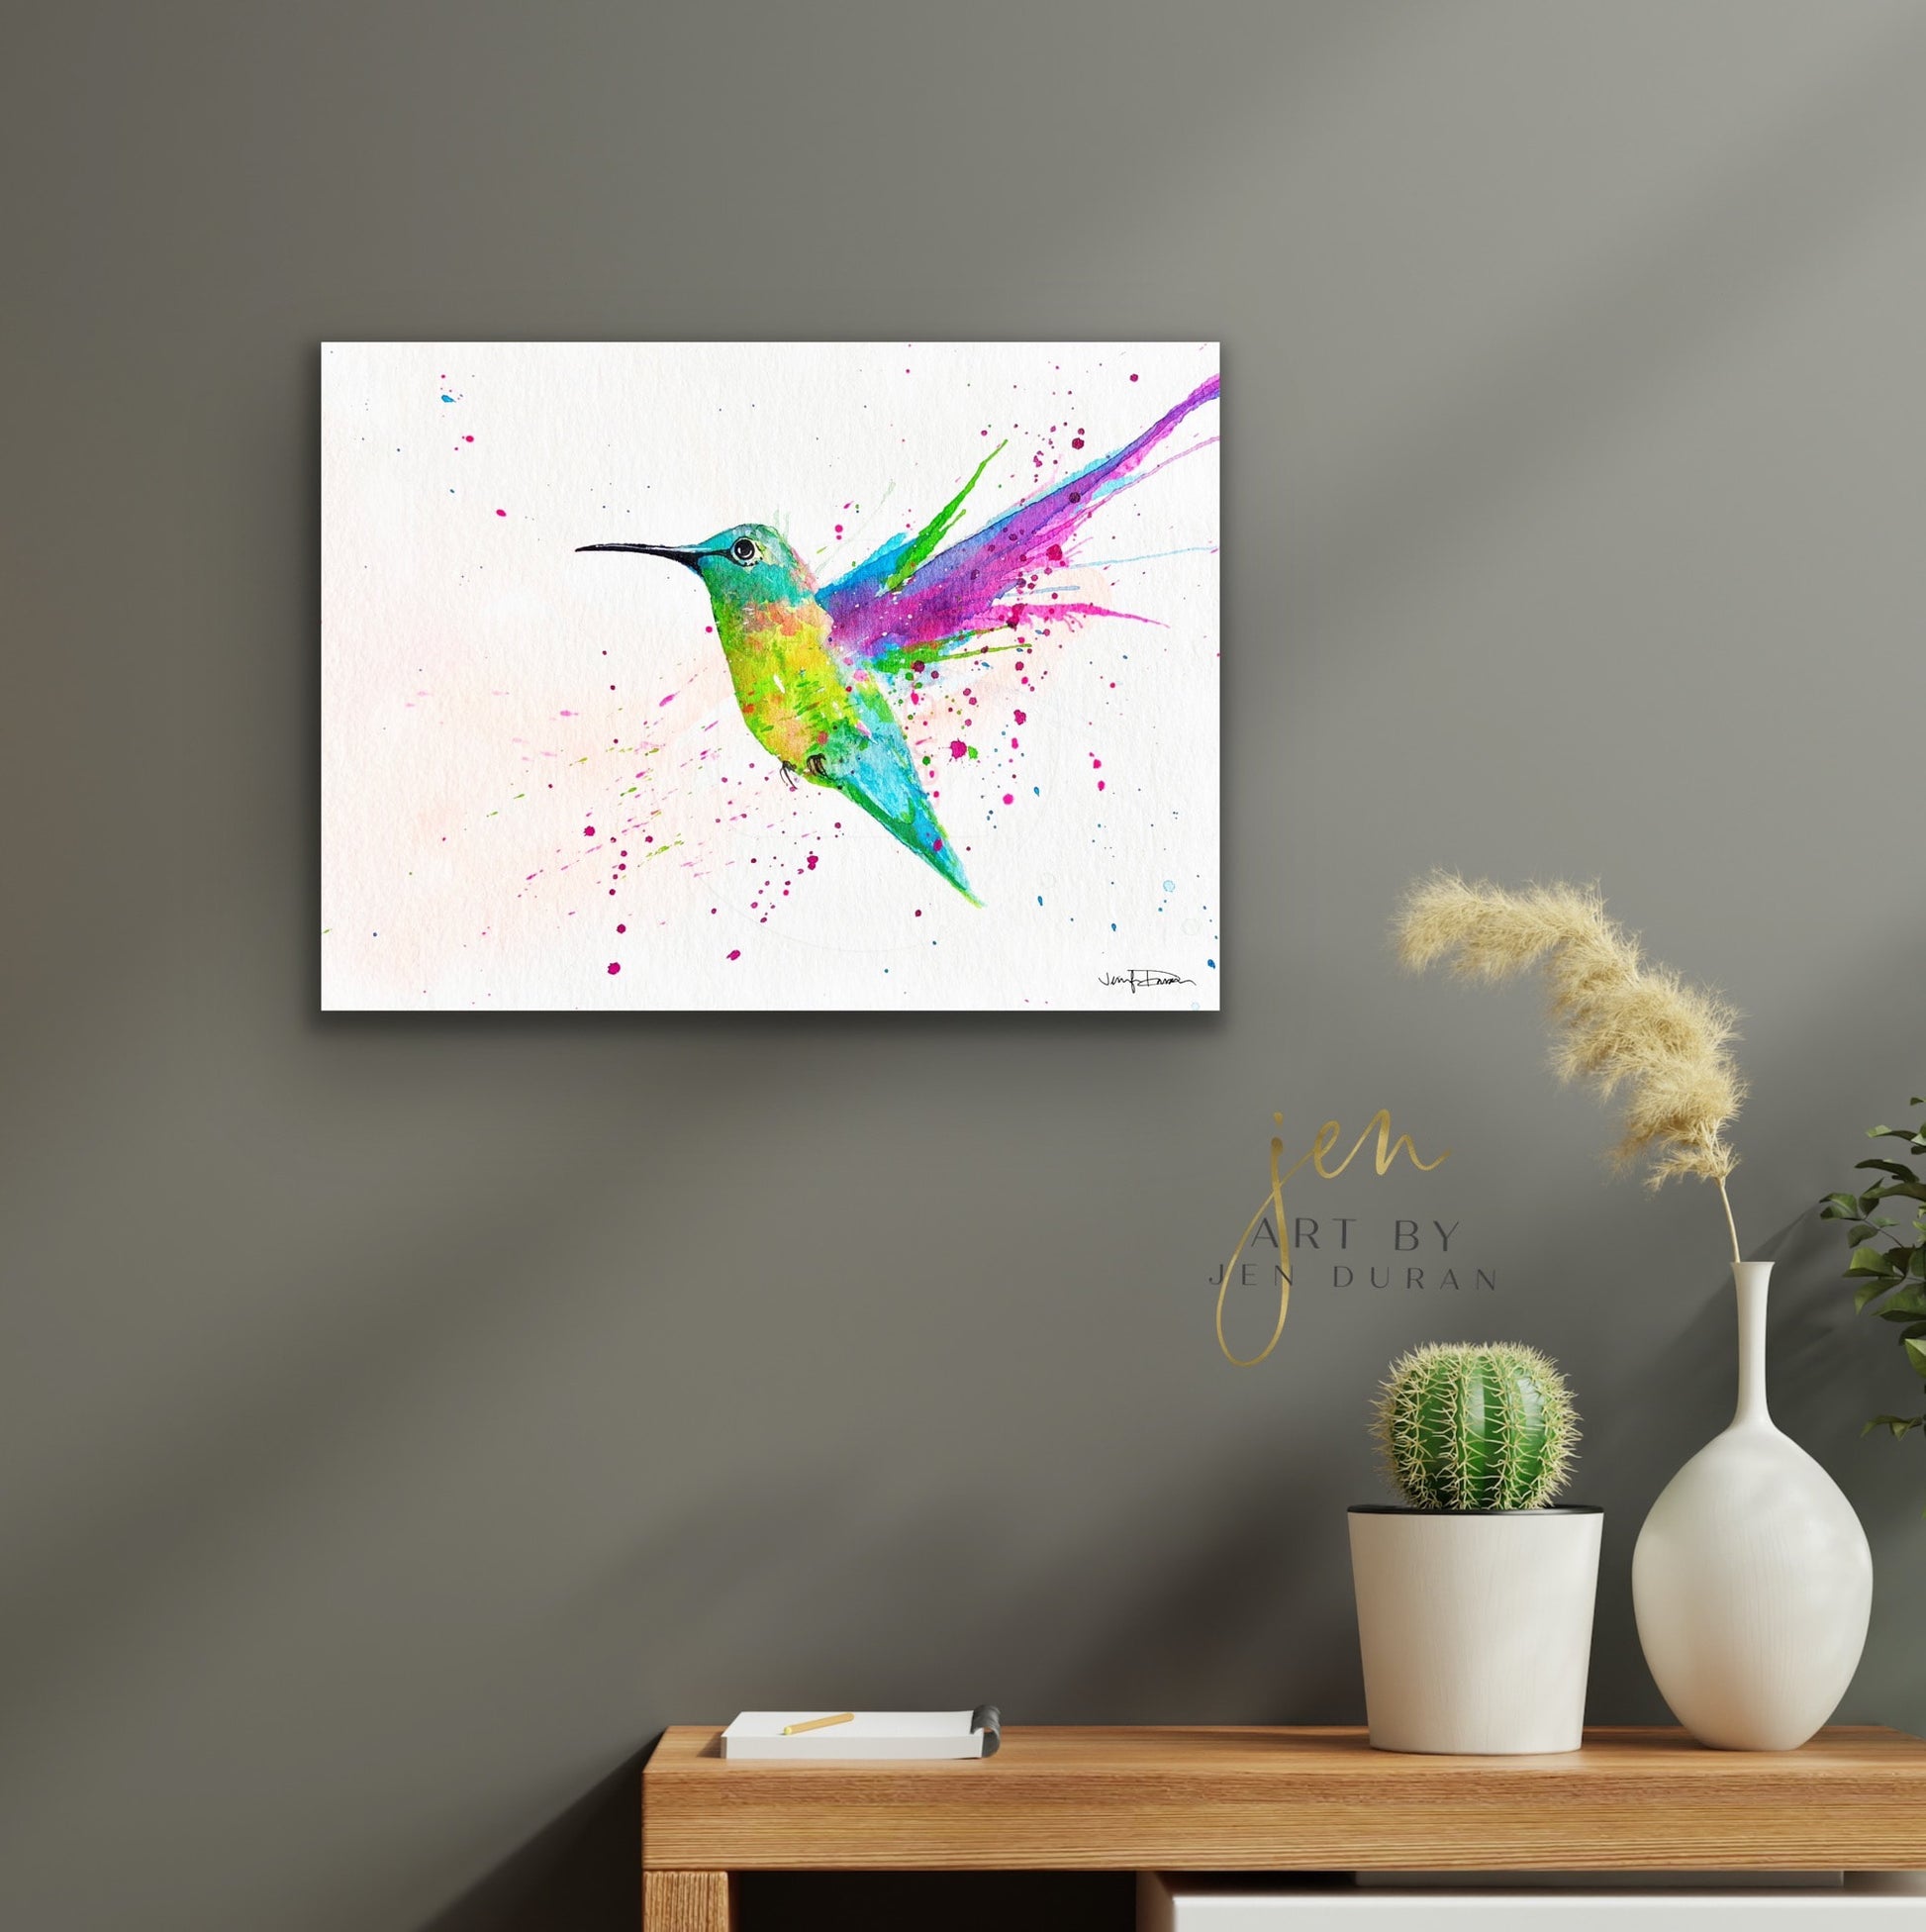 Watercolor Splash Hummingbird Painting Wall Art Home Decor Art By Jen Duran